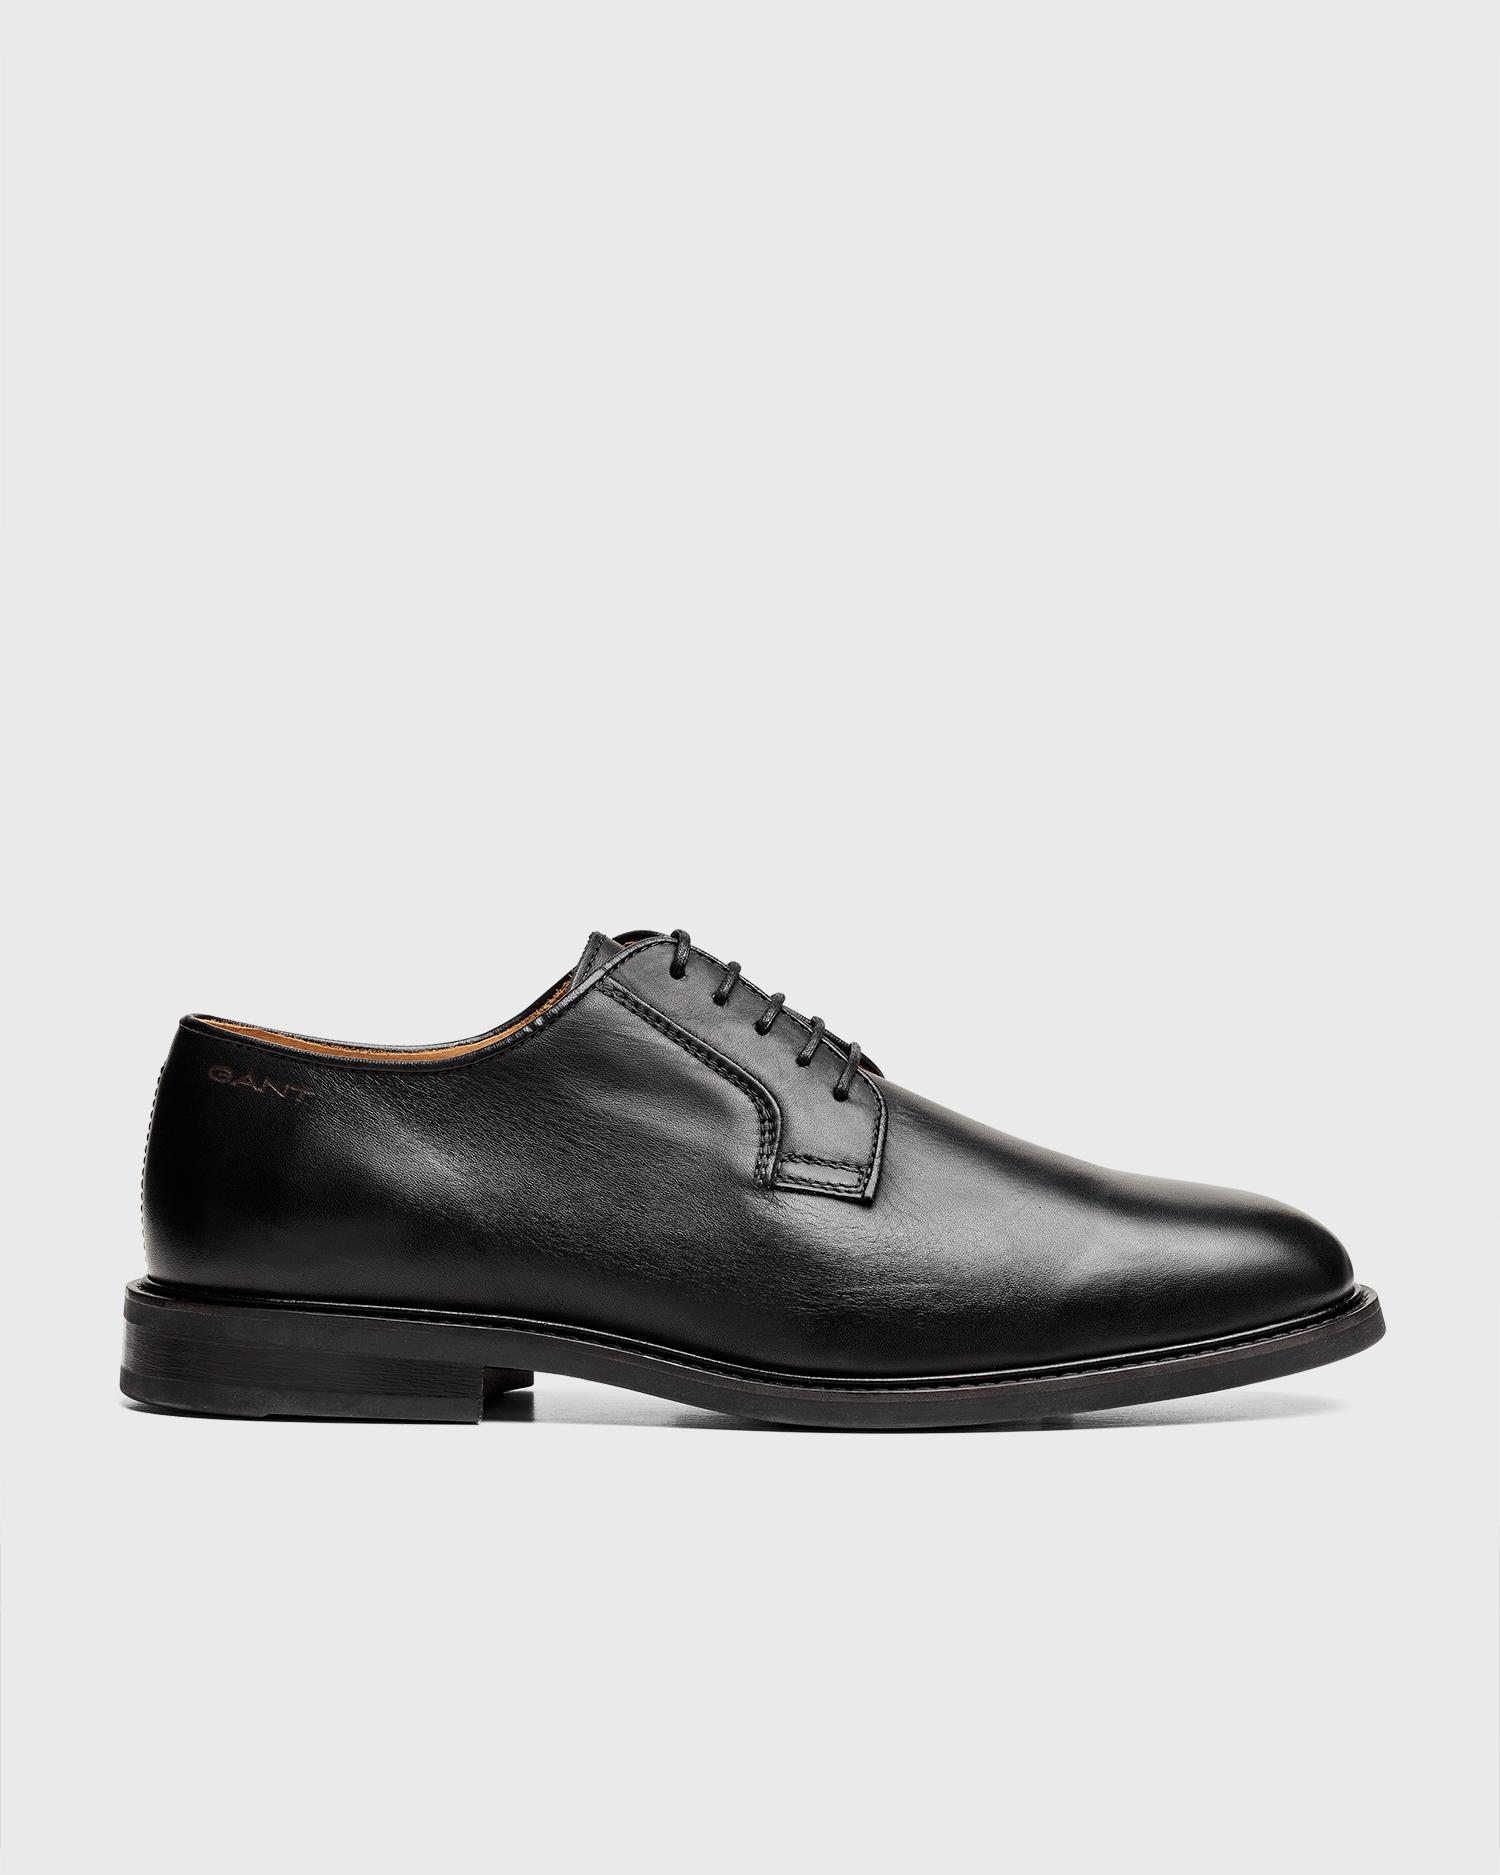 GANT Leather Ricardo Derby Shoes in Black for Men - Lyst